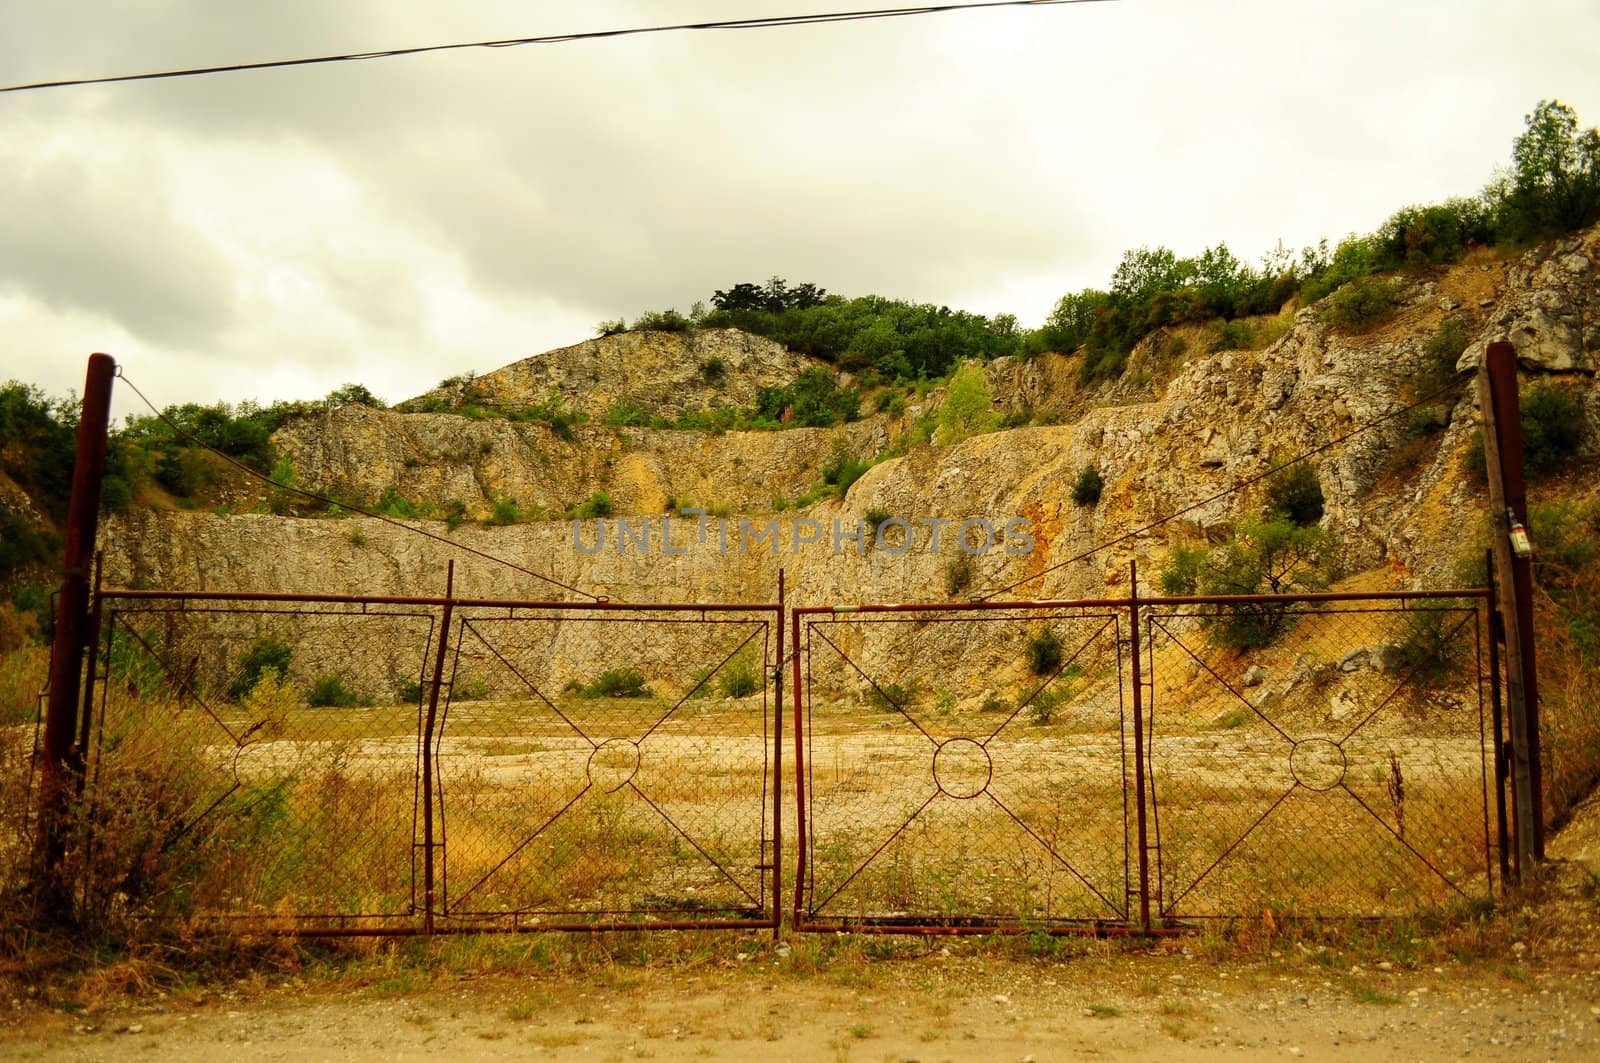 Abandoned quarry in Moravia, Czech Republic